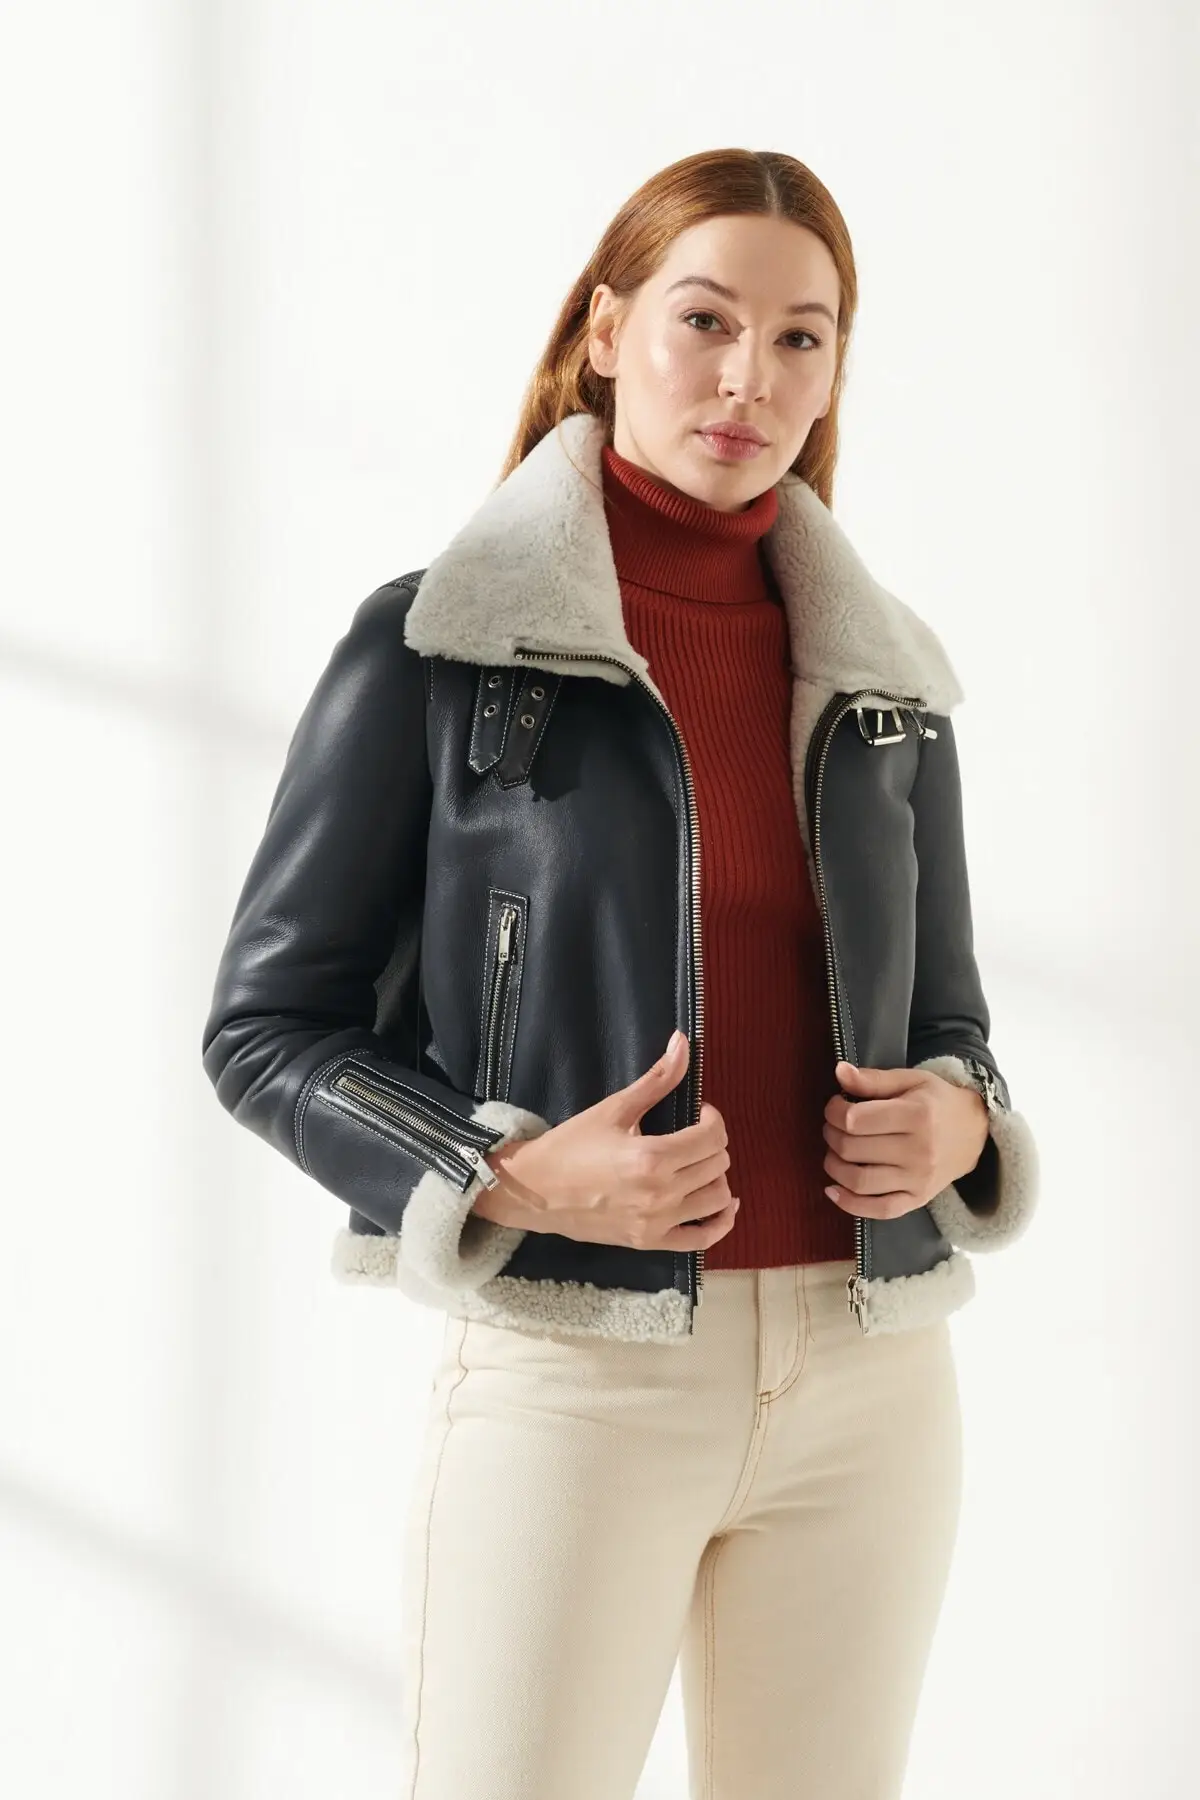 Women's Winter Fur Jacket Wool Sheep Skin Leather Jacket Genuine Slim Fit Biker Fashion Clothing from Turkey Monte